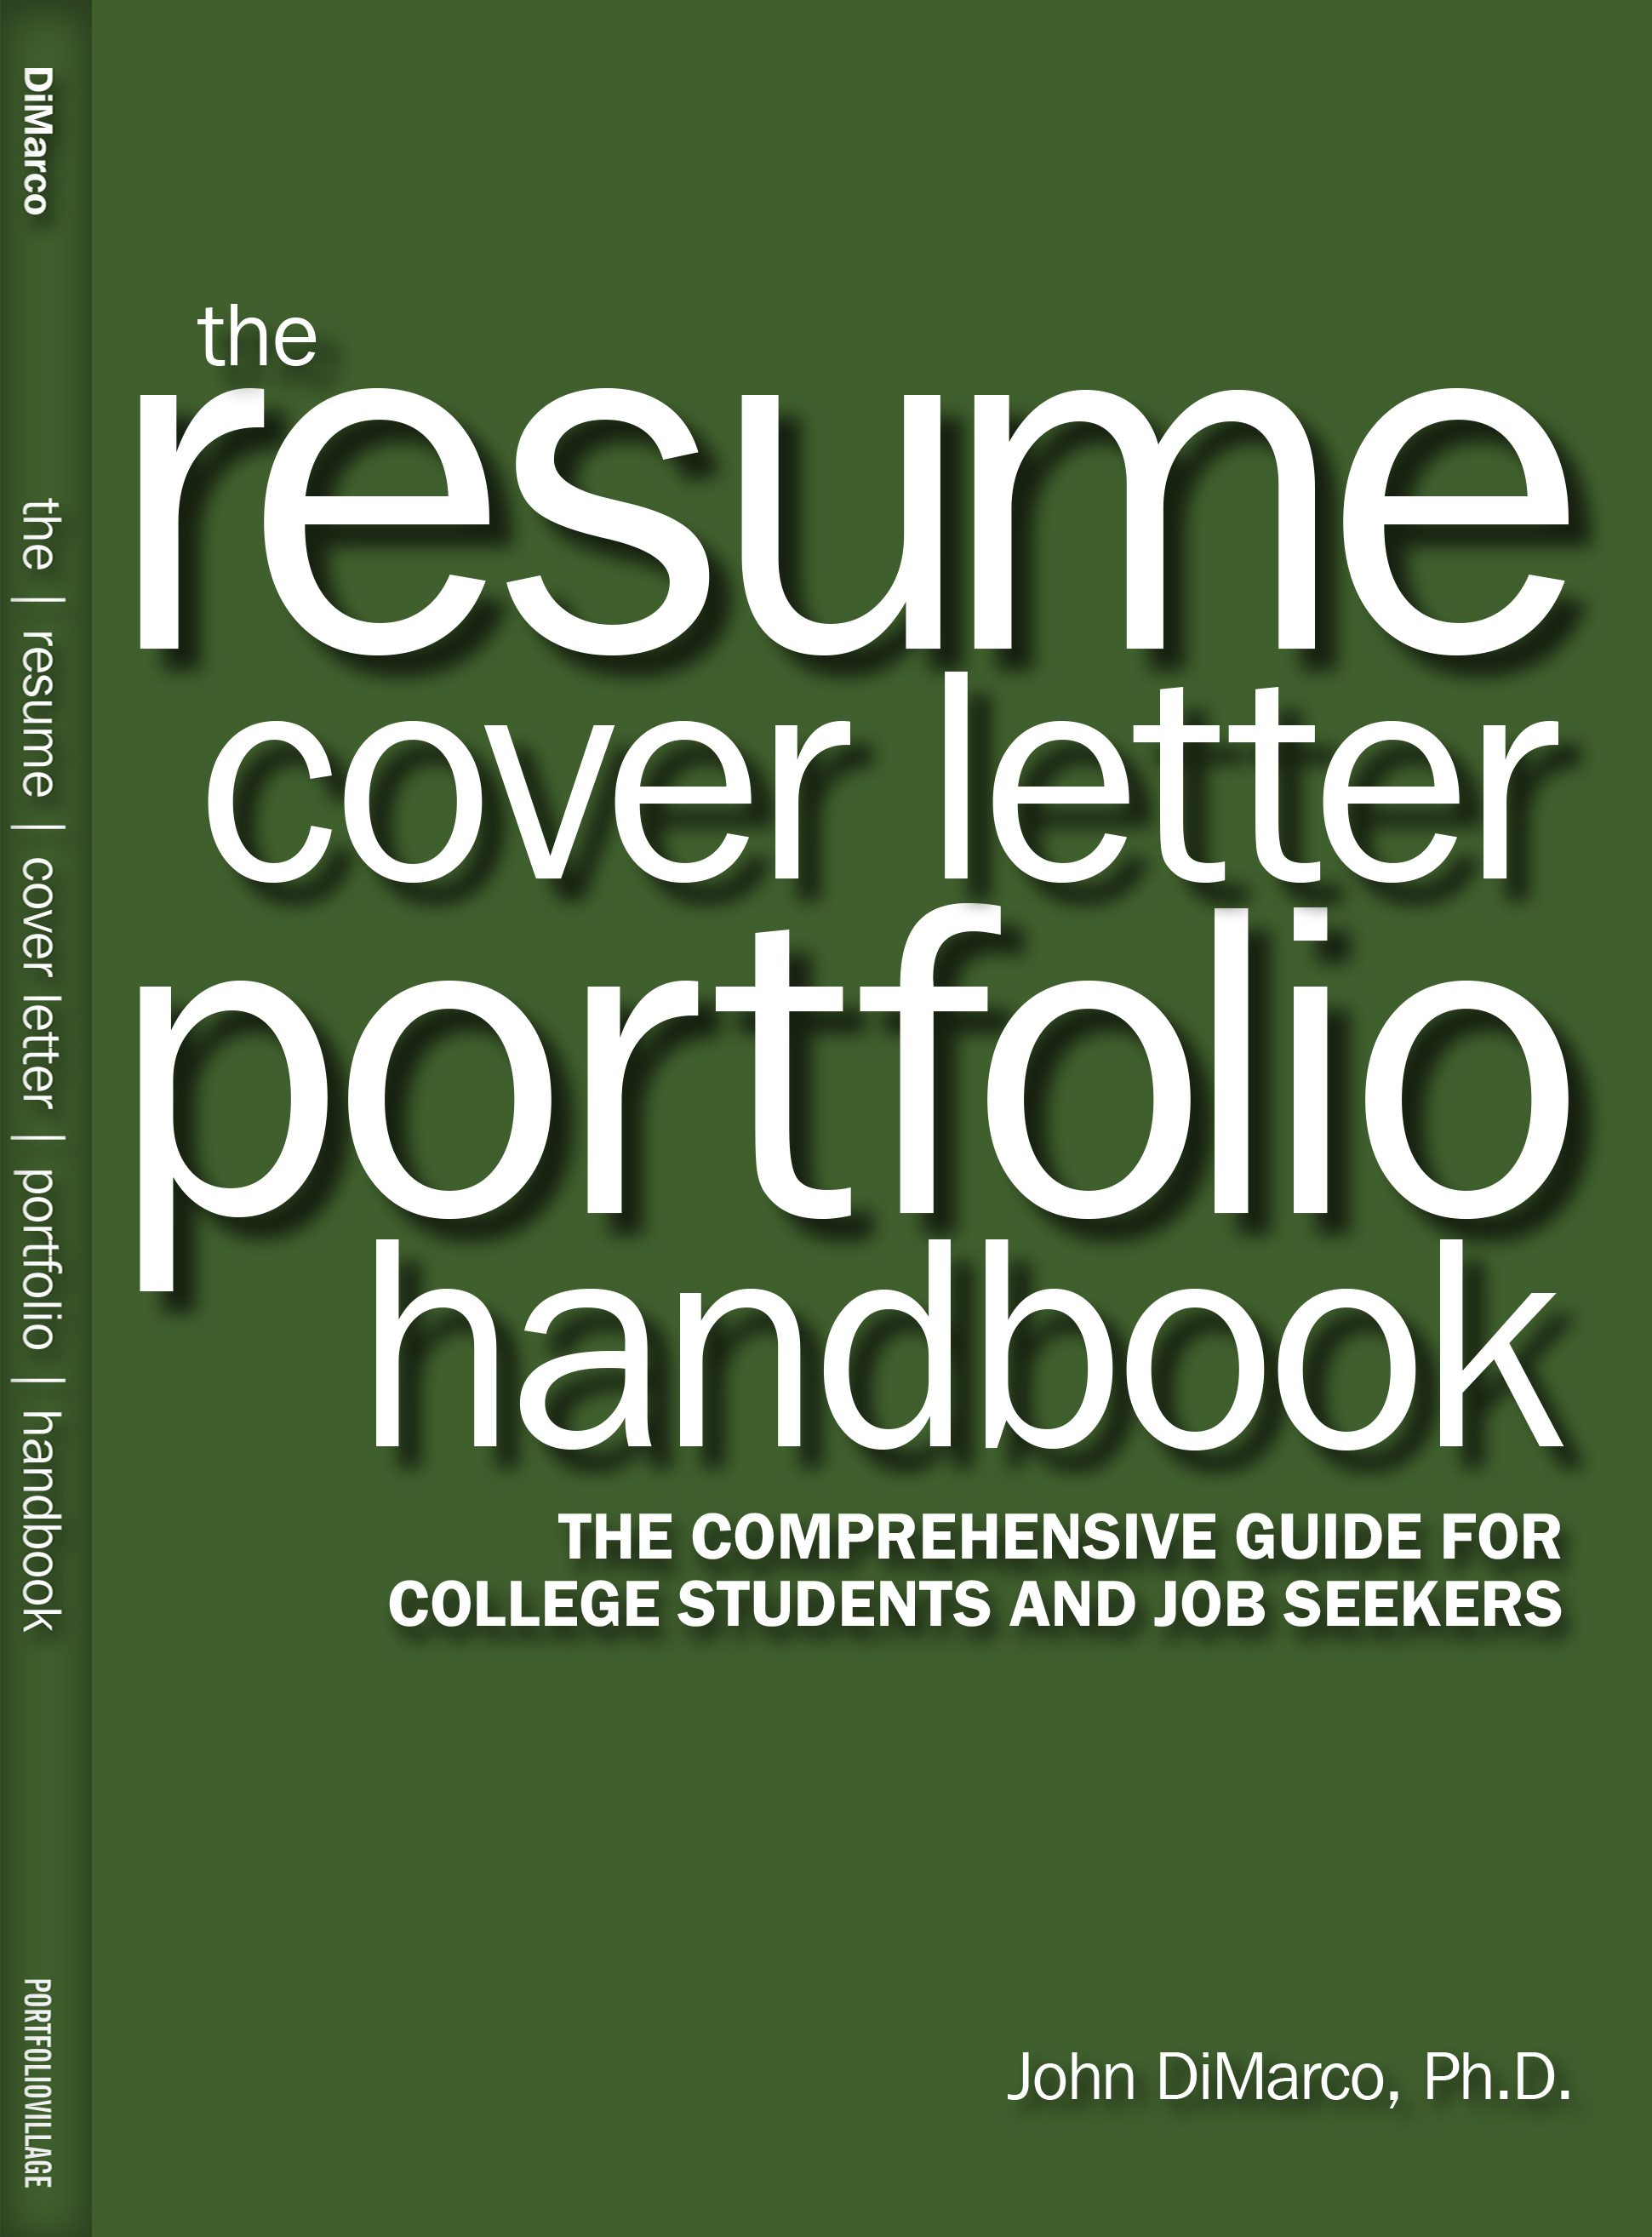 Resume, Cover Letter, Portfolio Handbook Cover